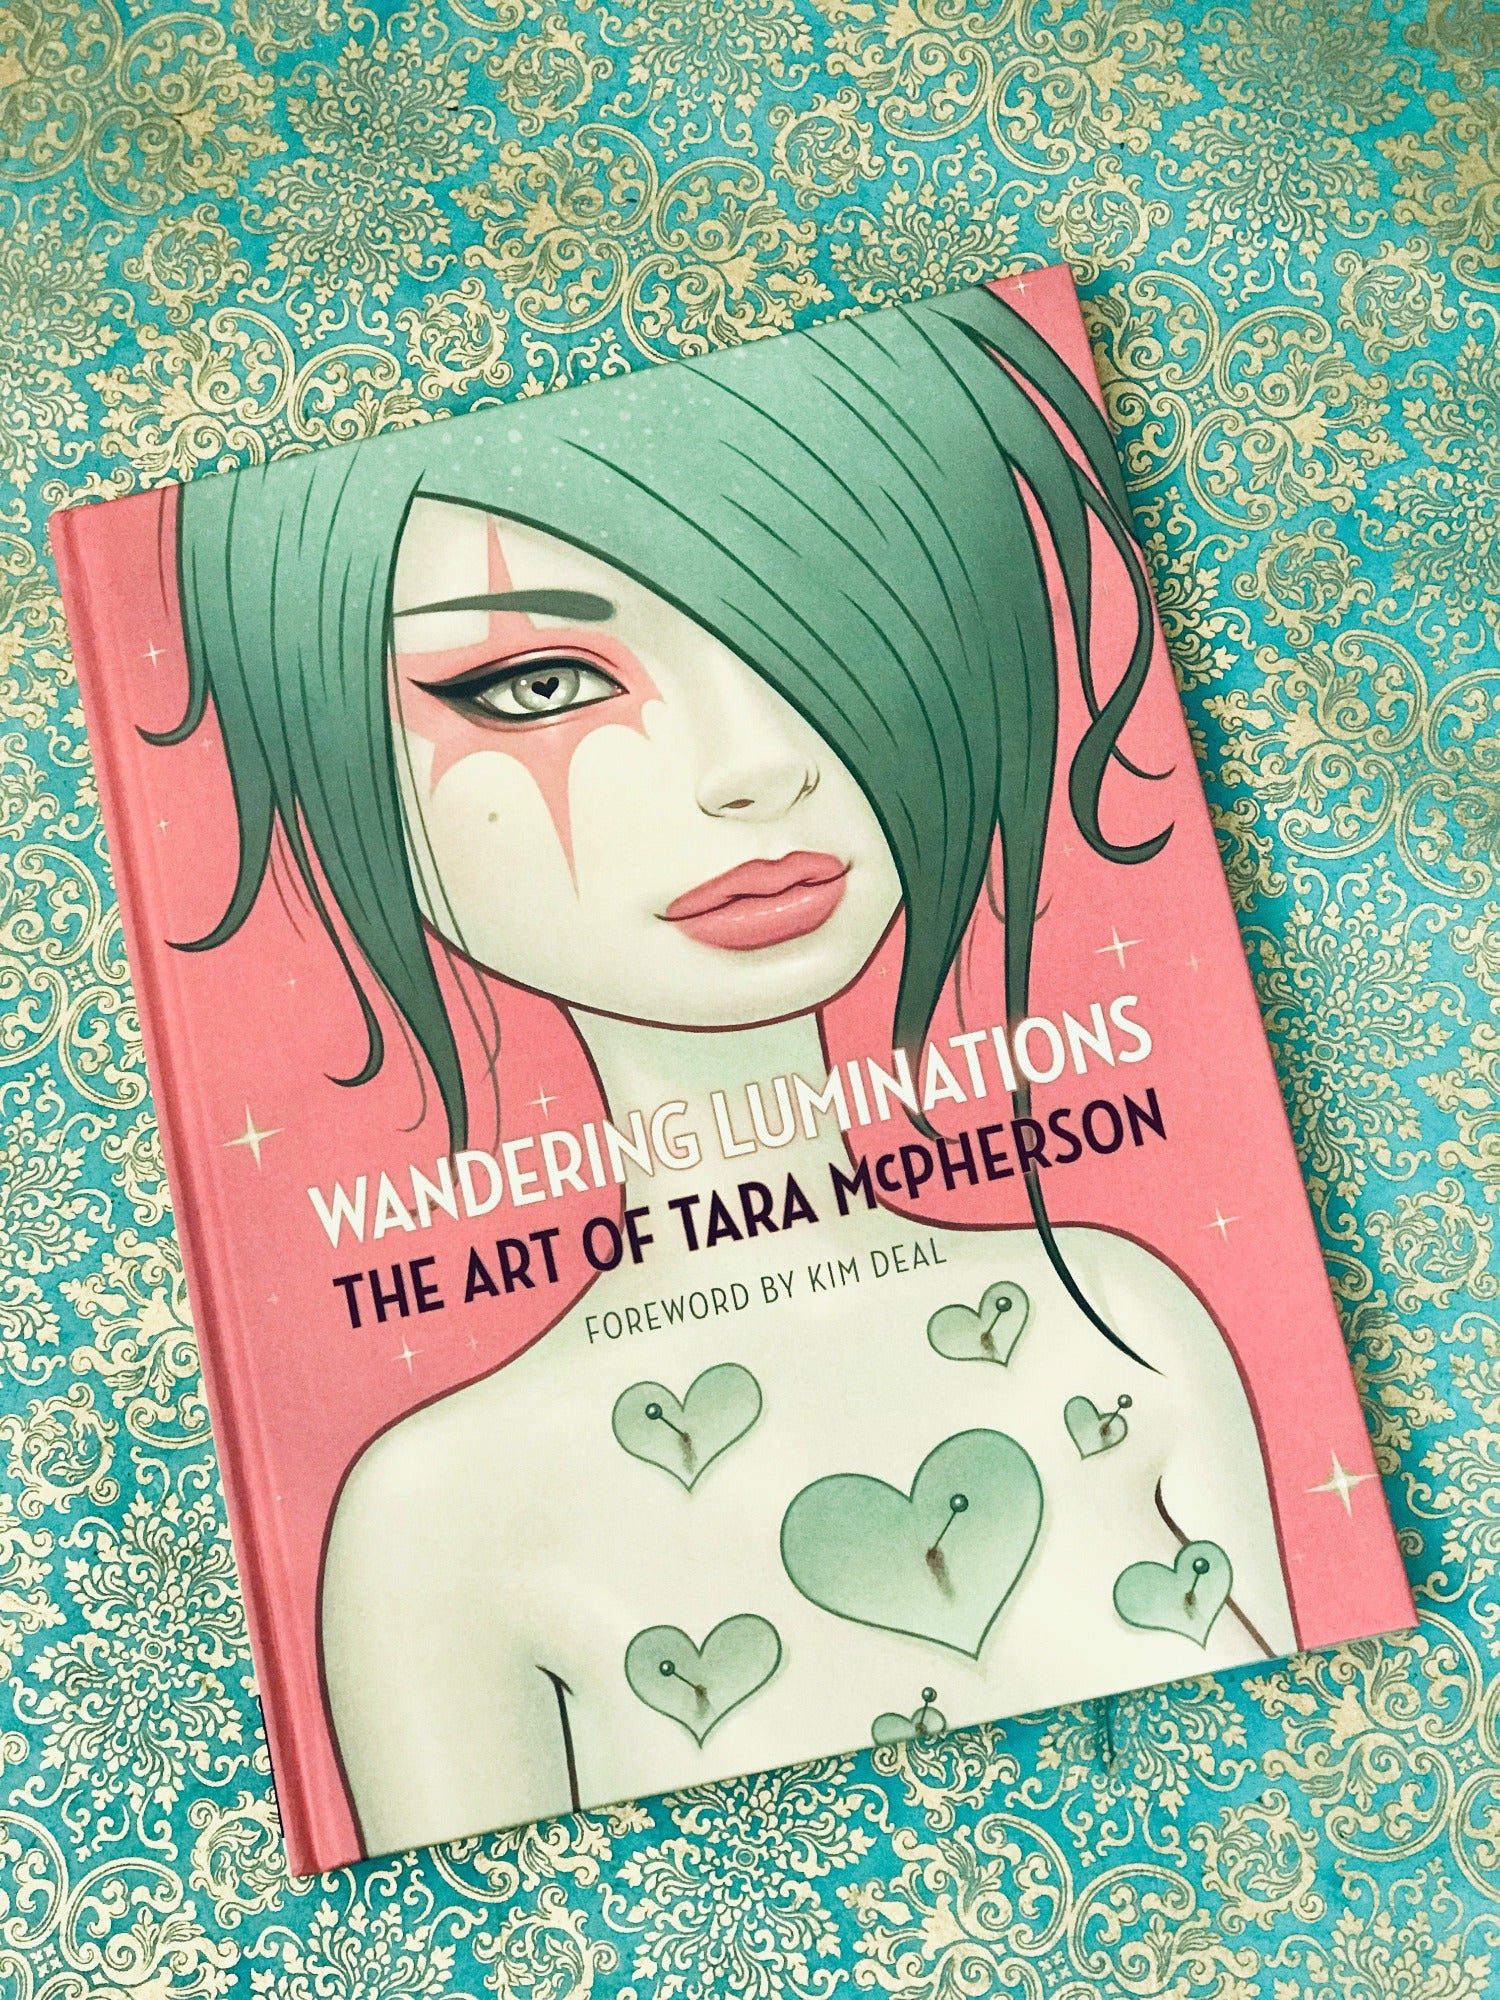 Wandering Luminations: The Art Of Tara McPherson